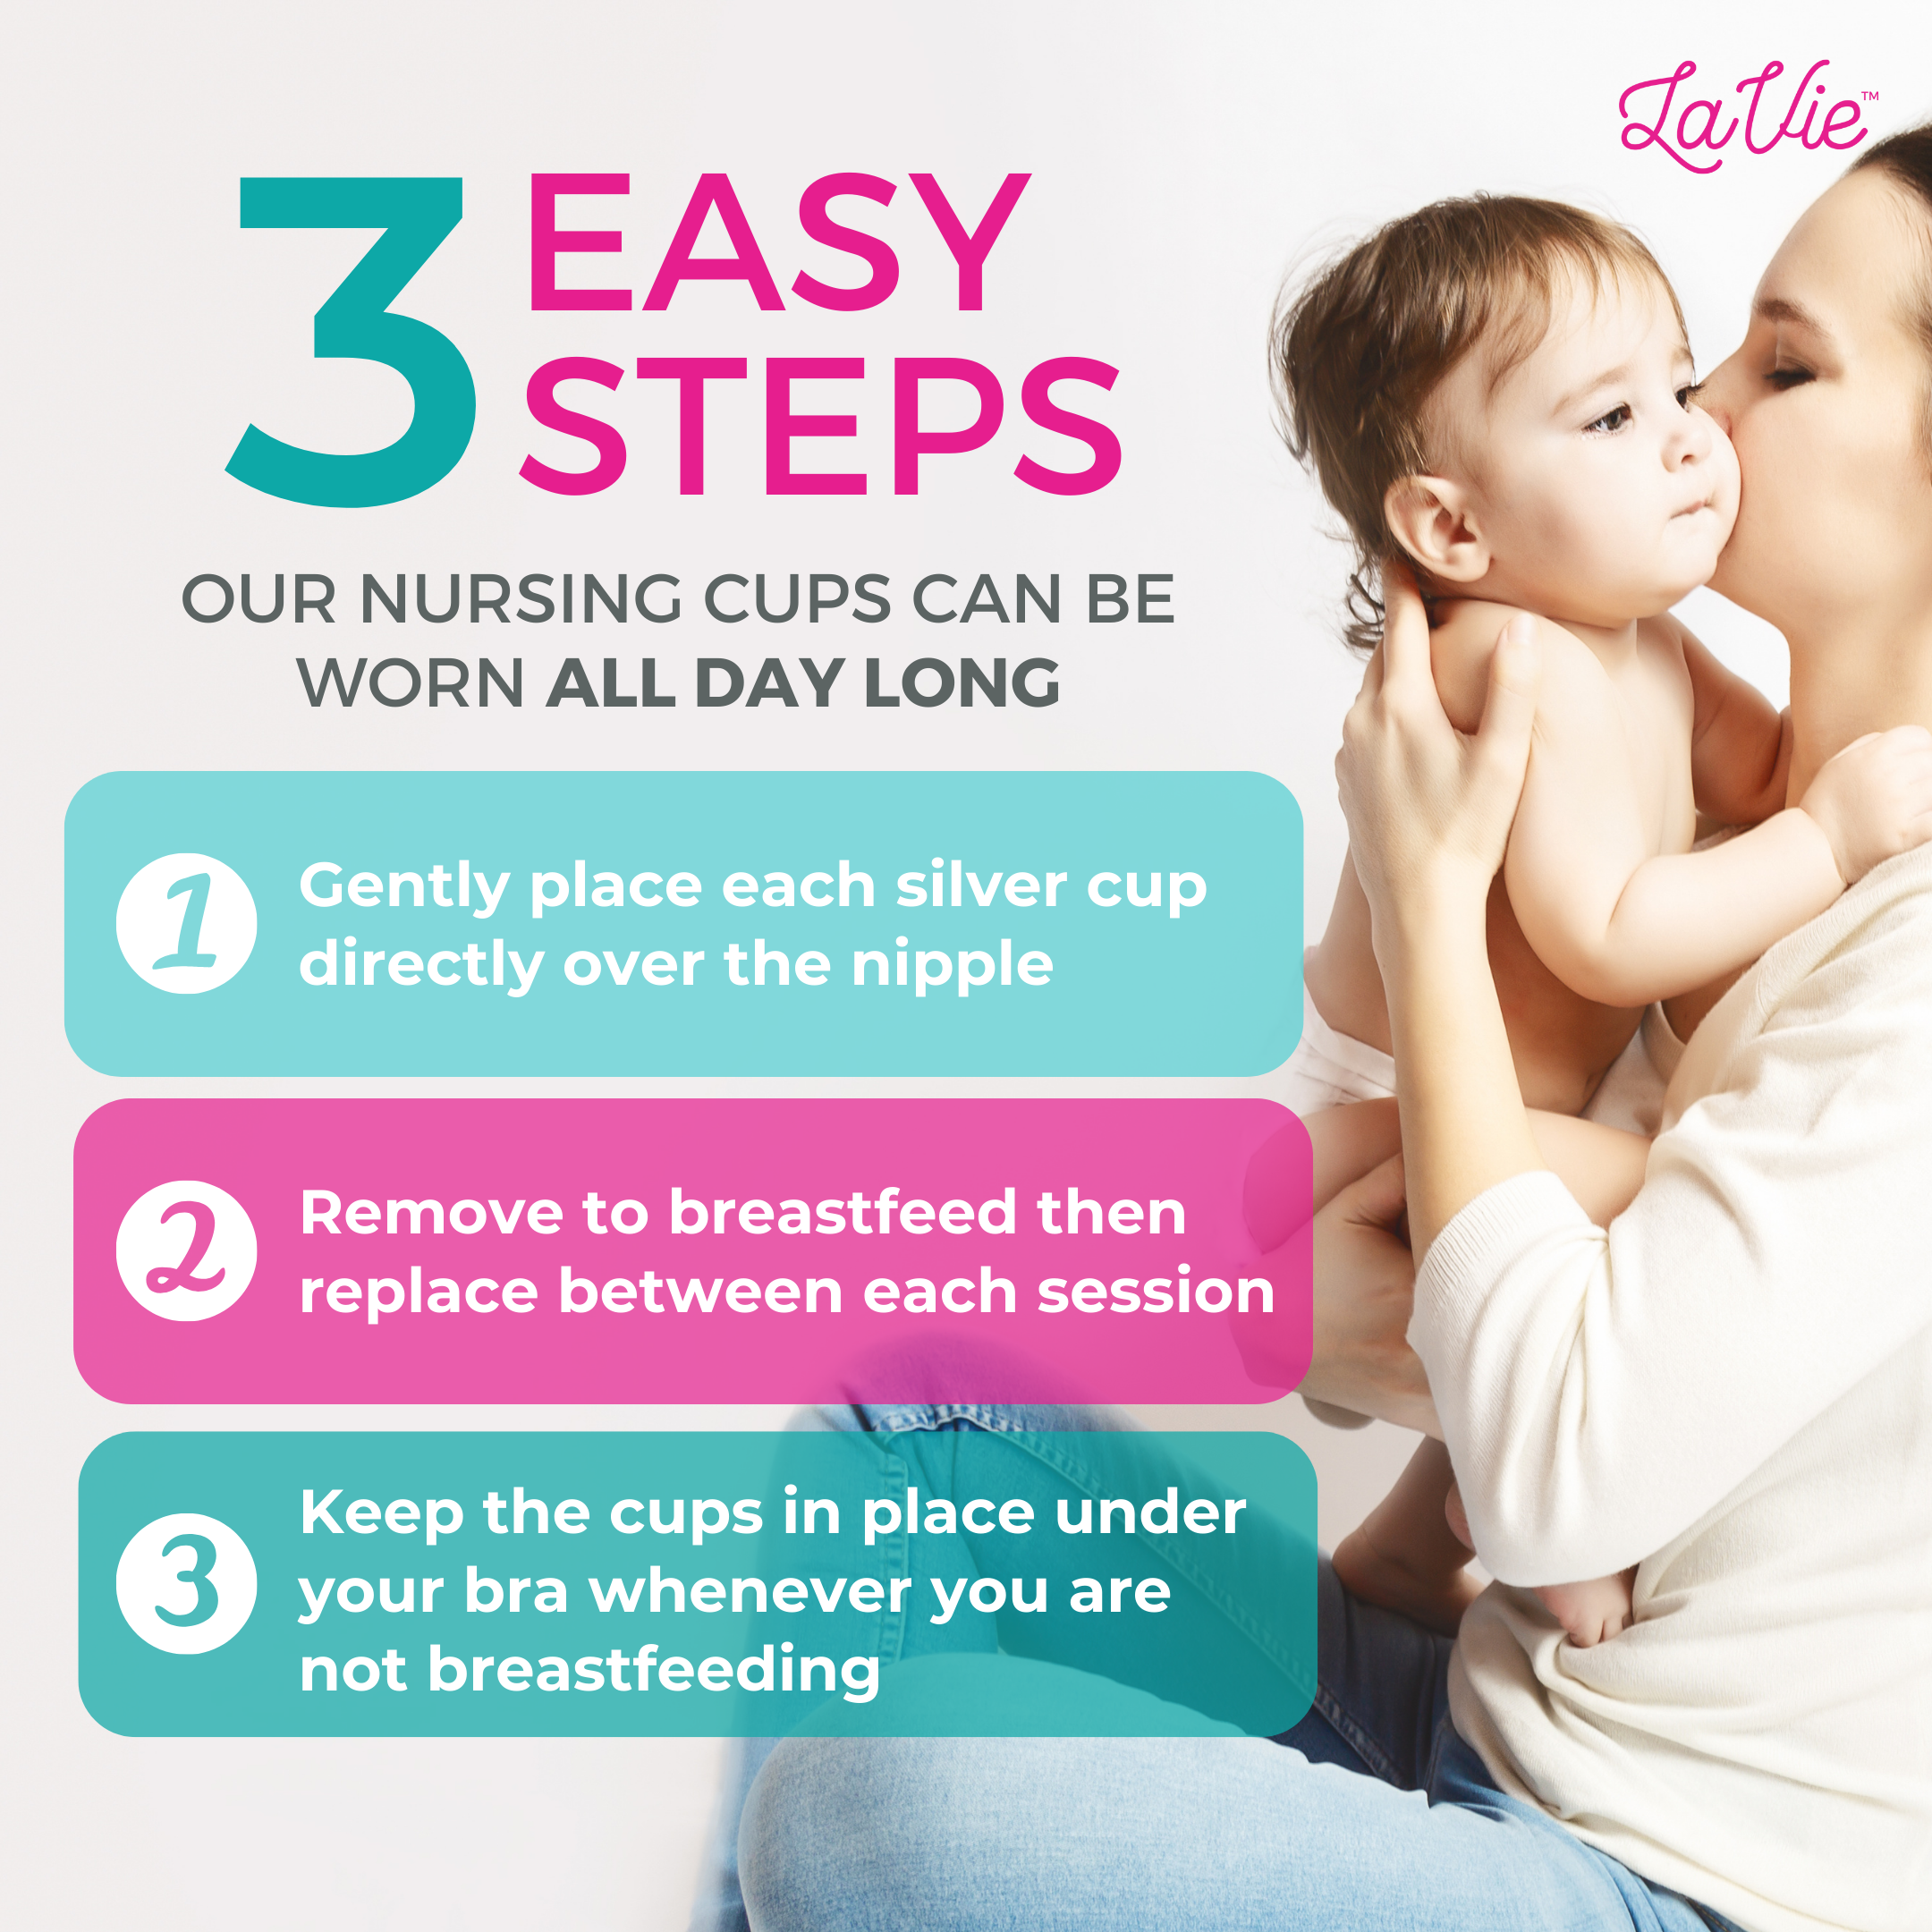 LaVie lactation-friendly silver nursing cups for breastfeeding